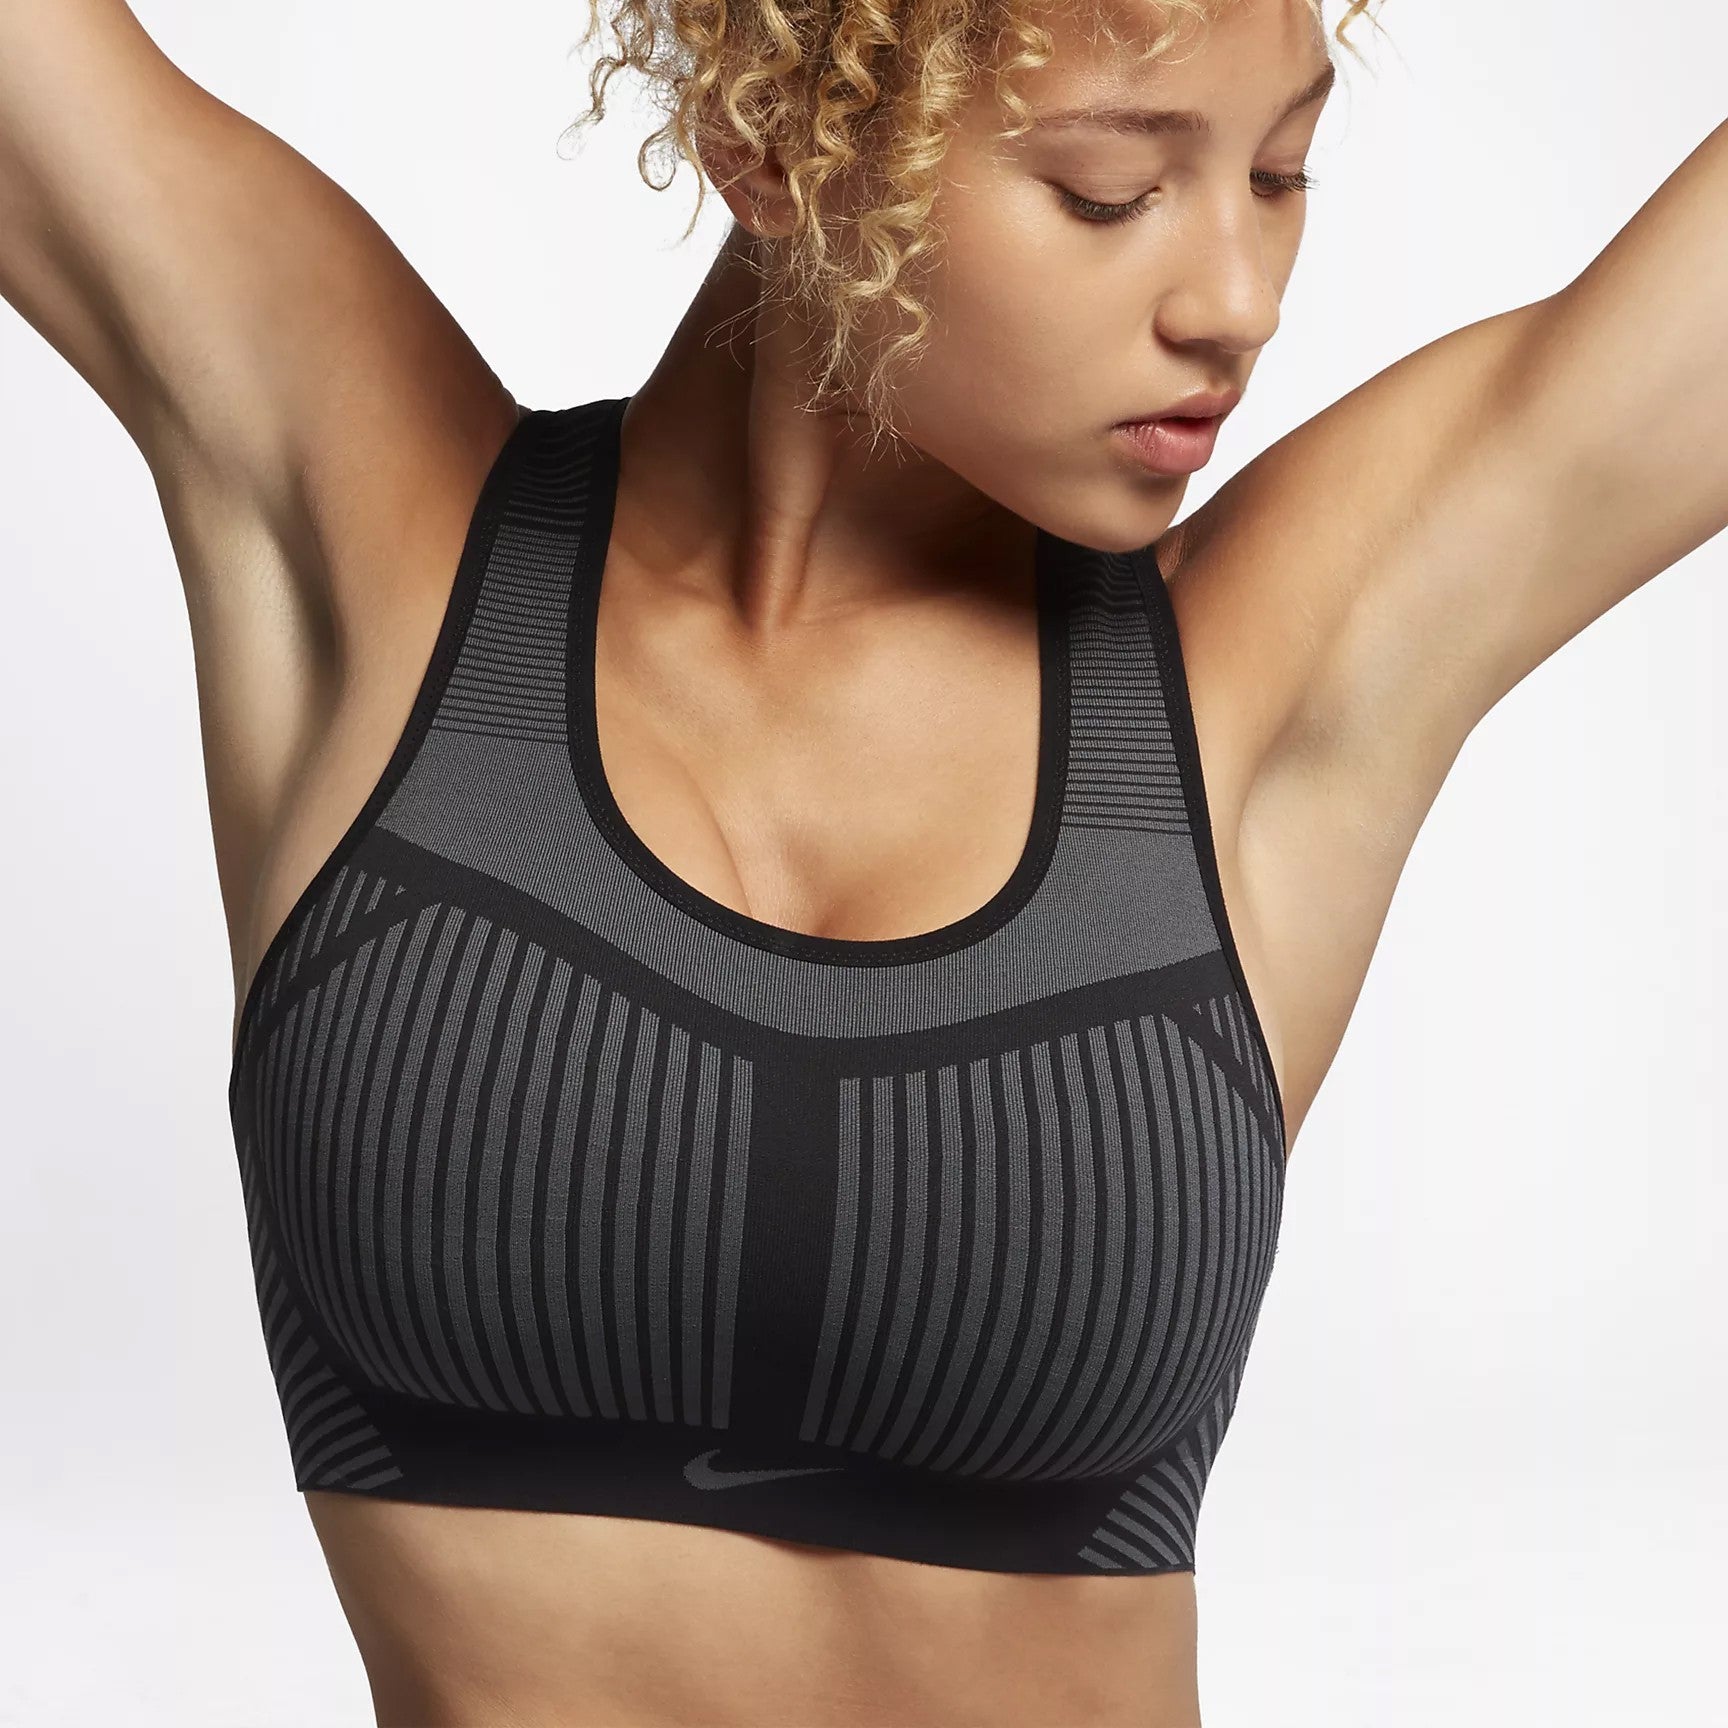 Nike Flyknit High Support Sports Bra Womens Black/Grey, £8.00